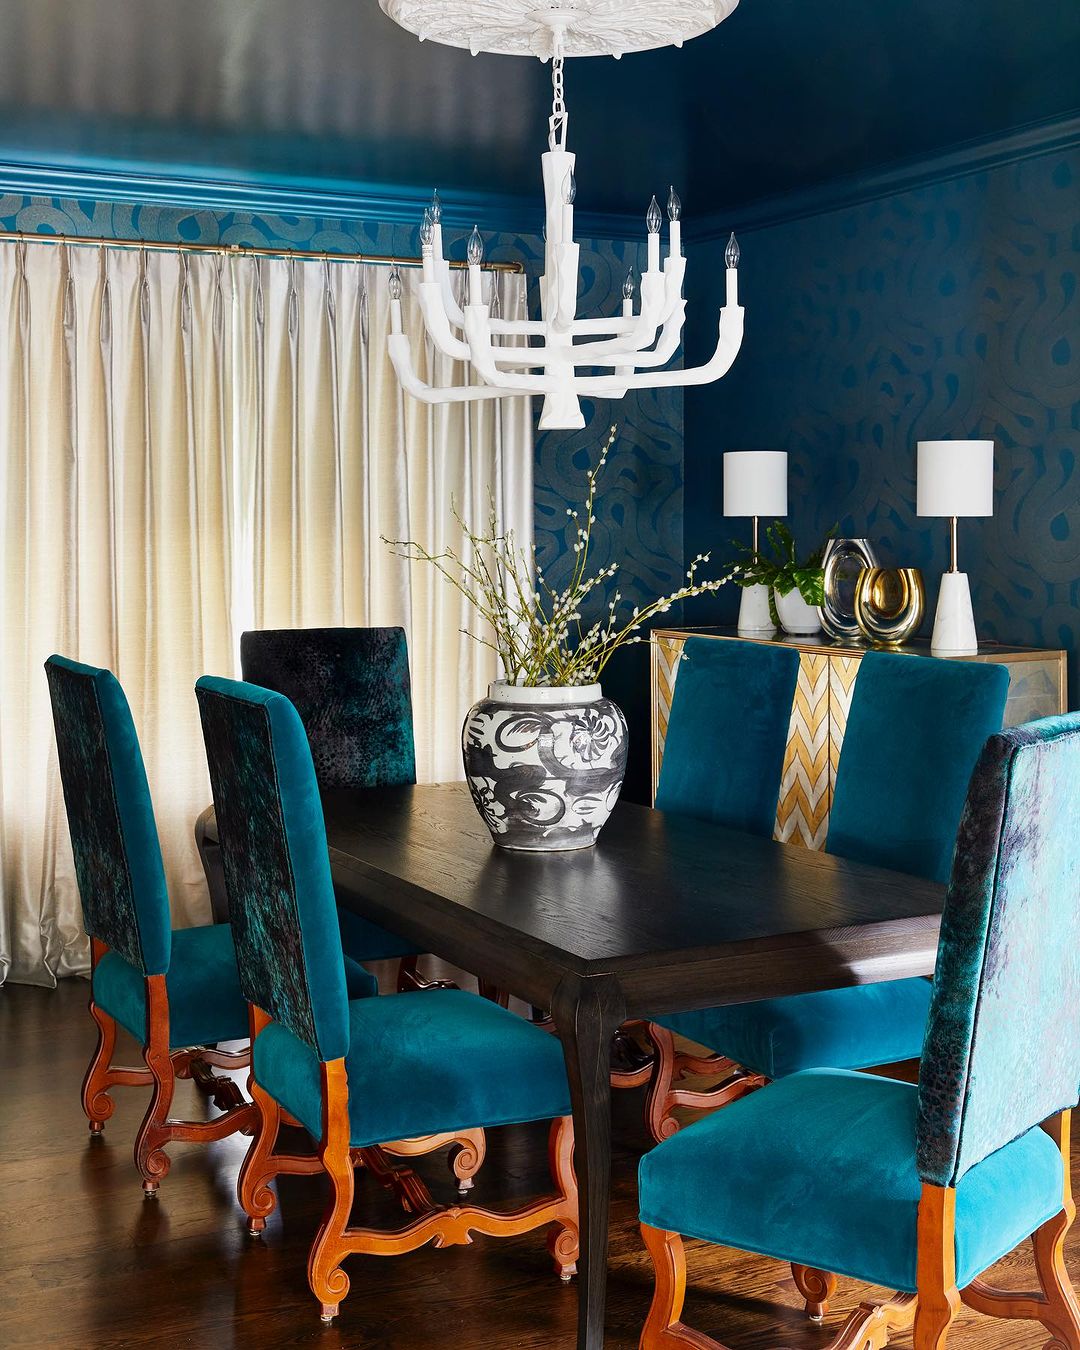 Teal Dining Drama: Bold Colors Meet Classic Furniture